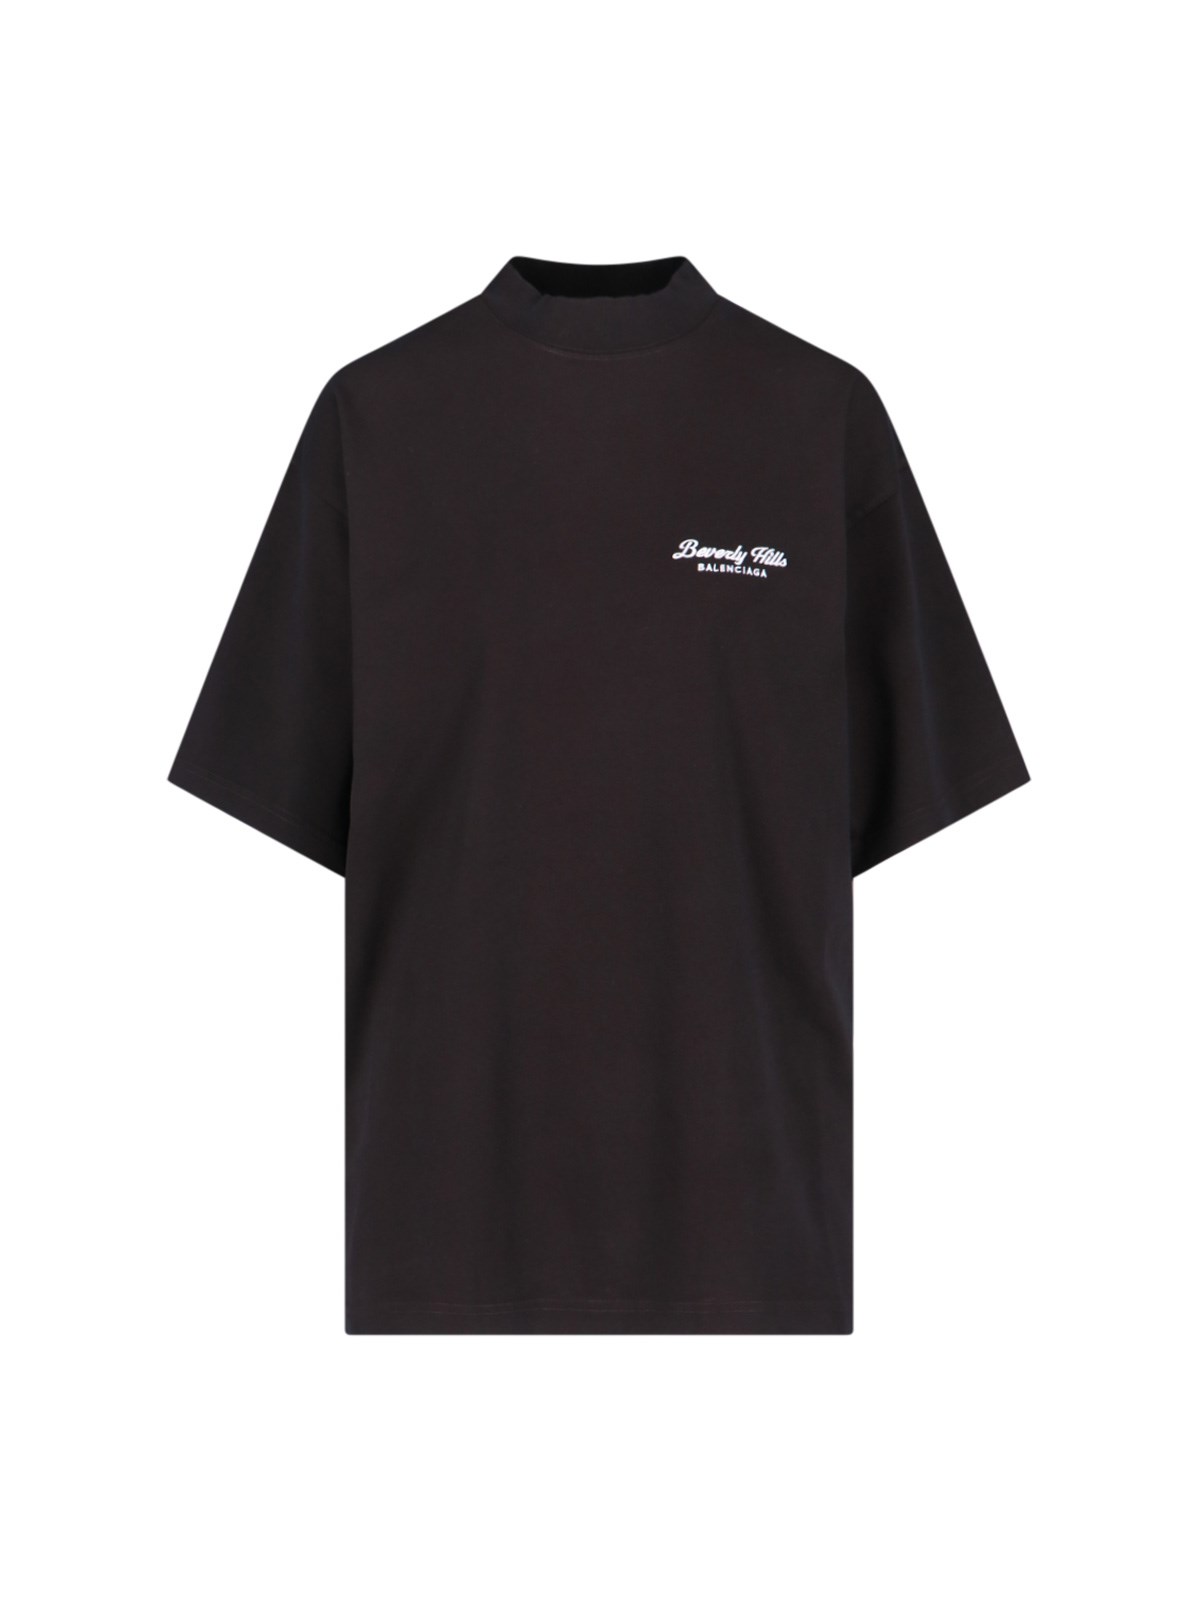 Balenciaga 'beverly Hills' Vintage Jersey T-shirt In Black  